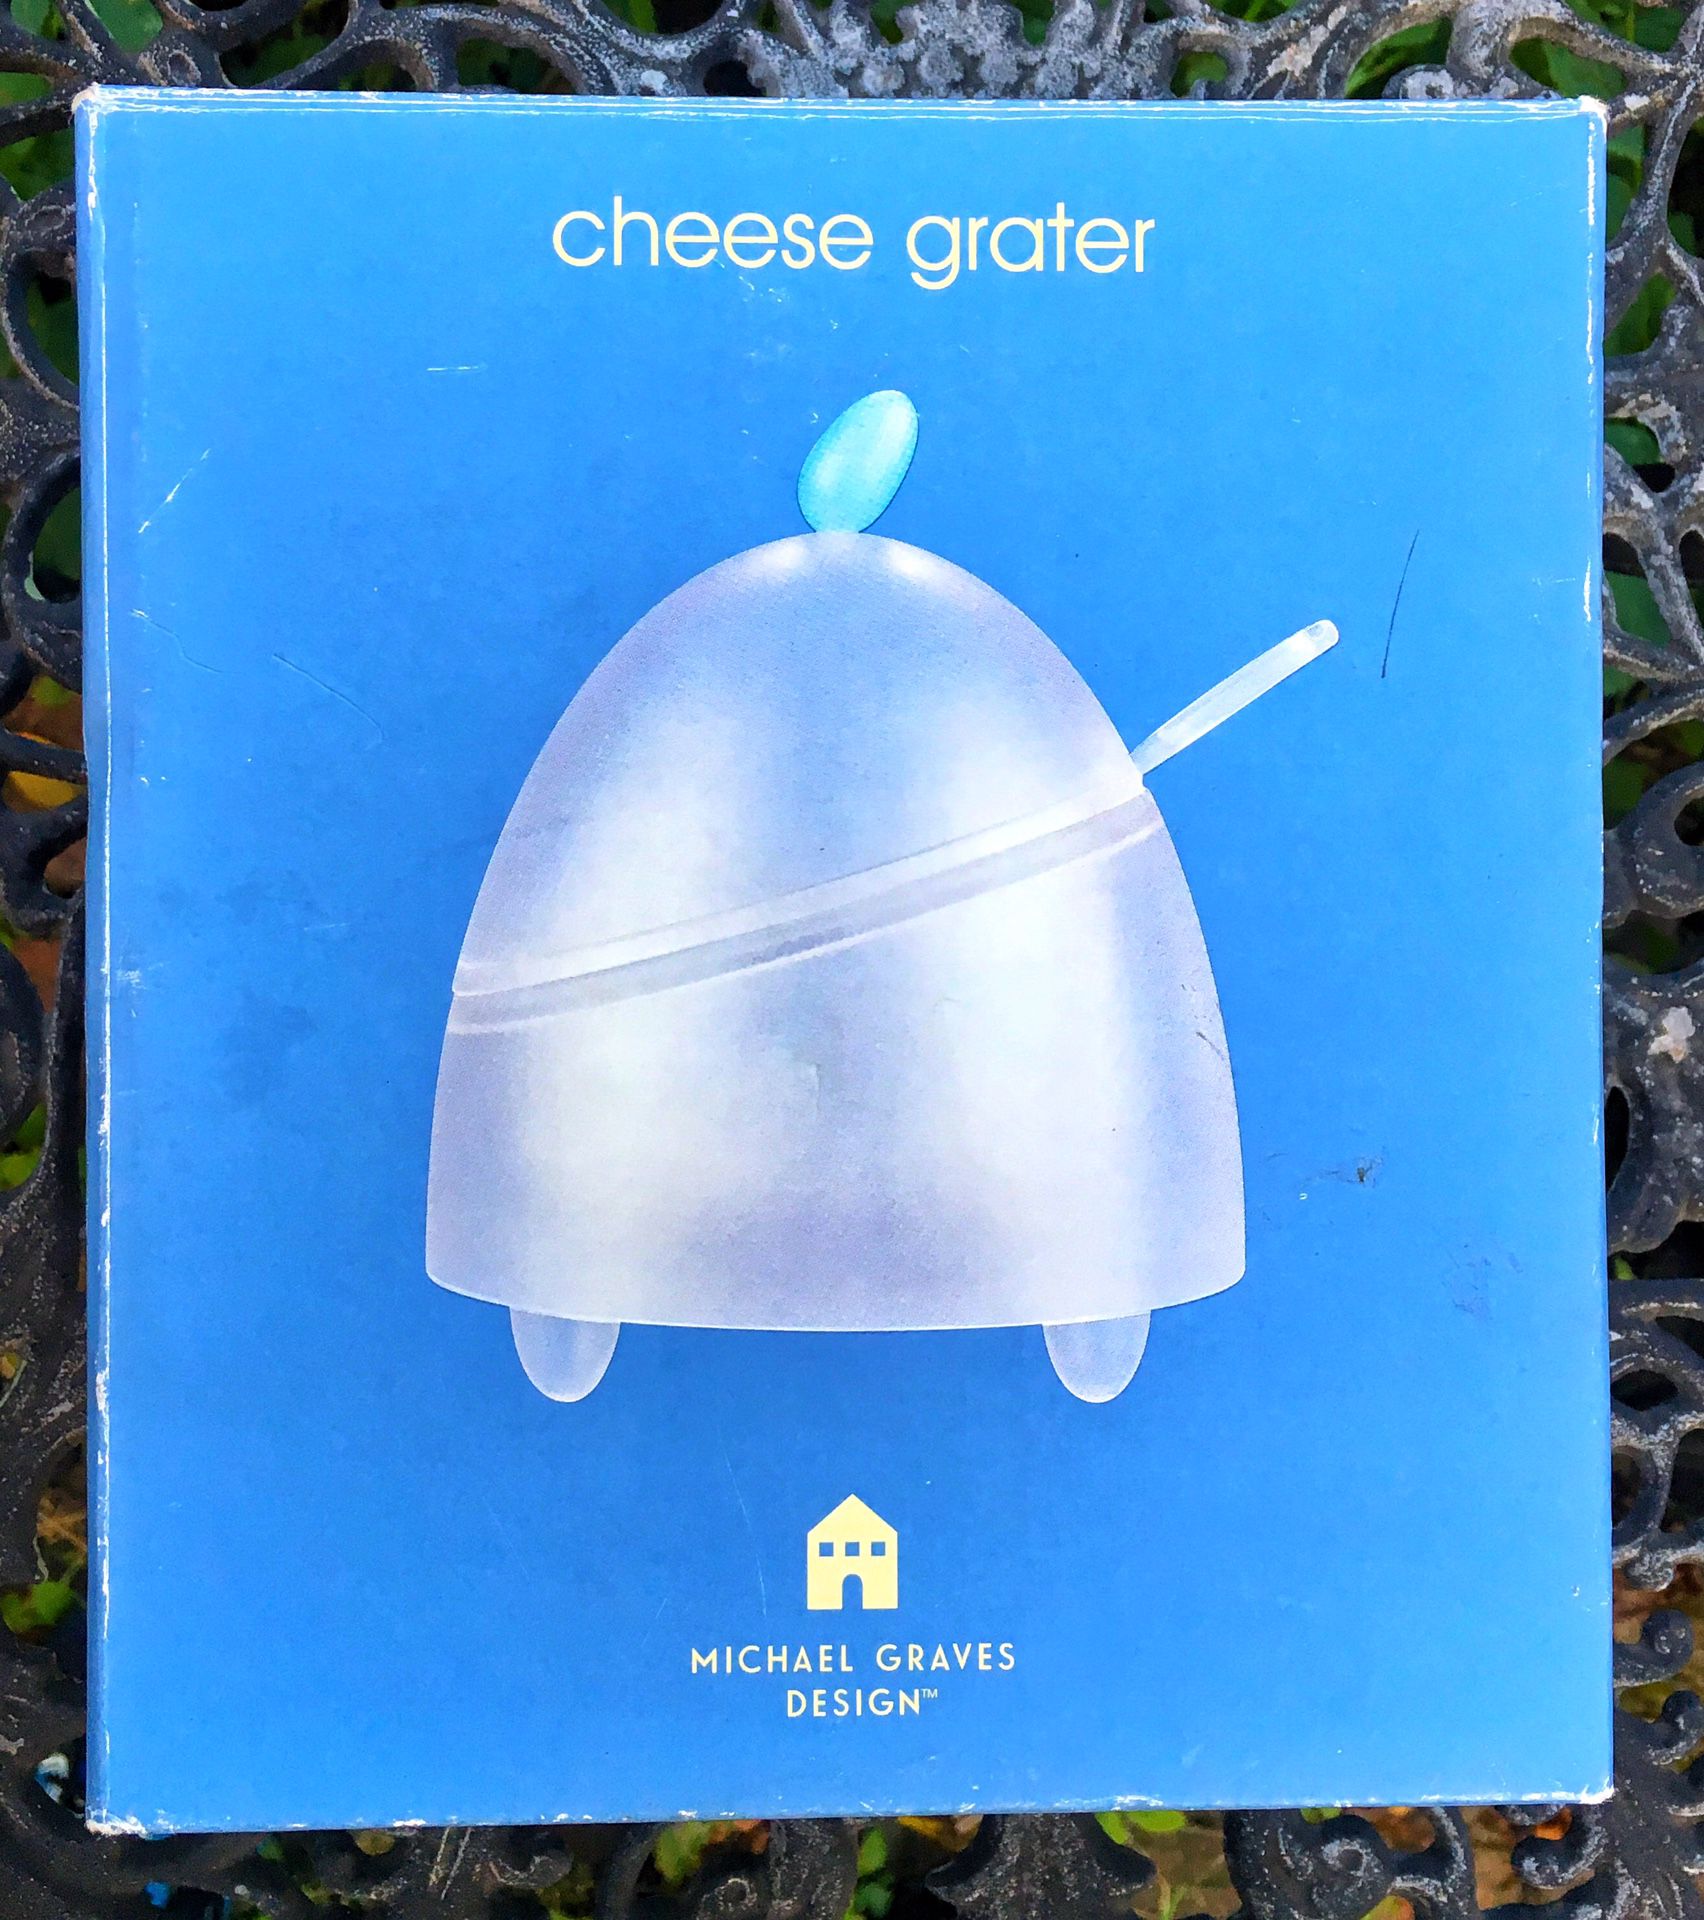 Michal graves post modern designer cheese grater in original box